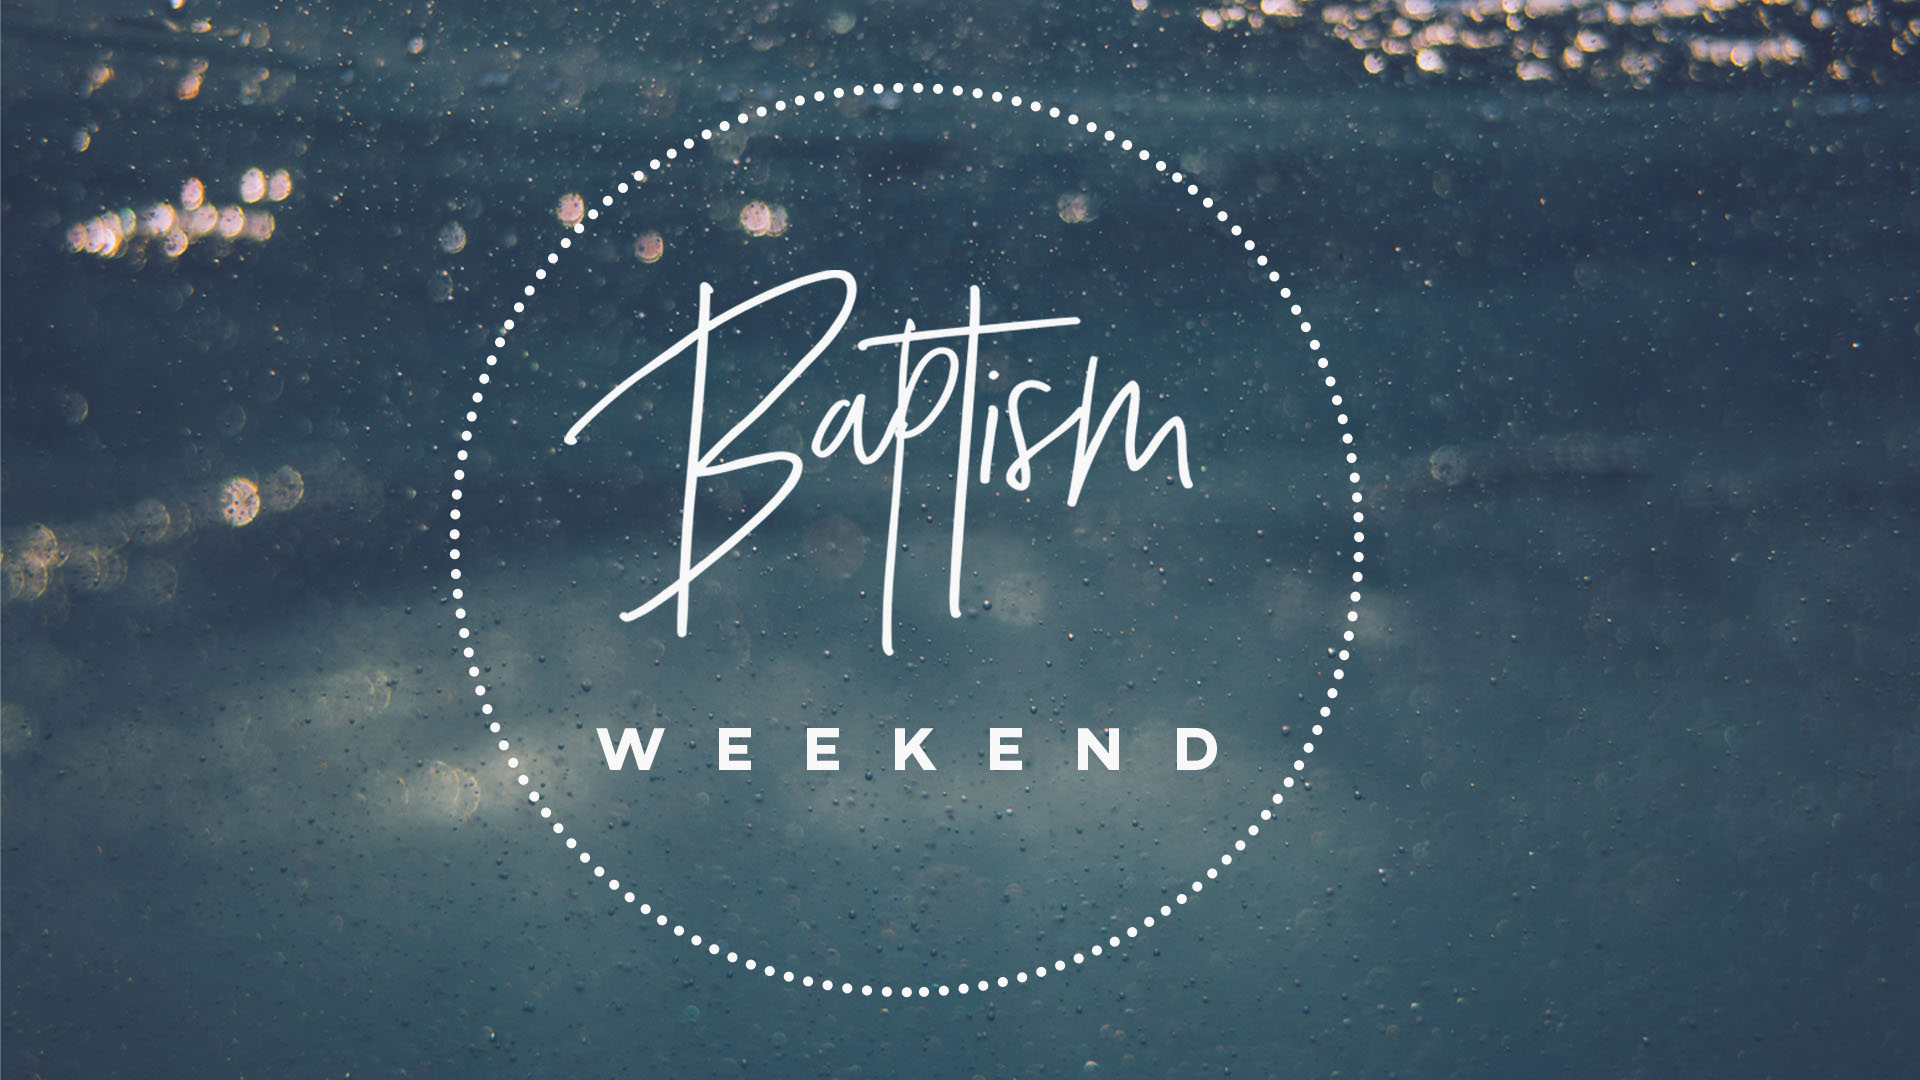 Baptism Weekend

April 22 & 23
Signup Today
